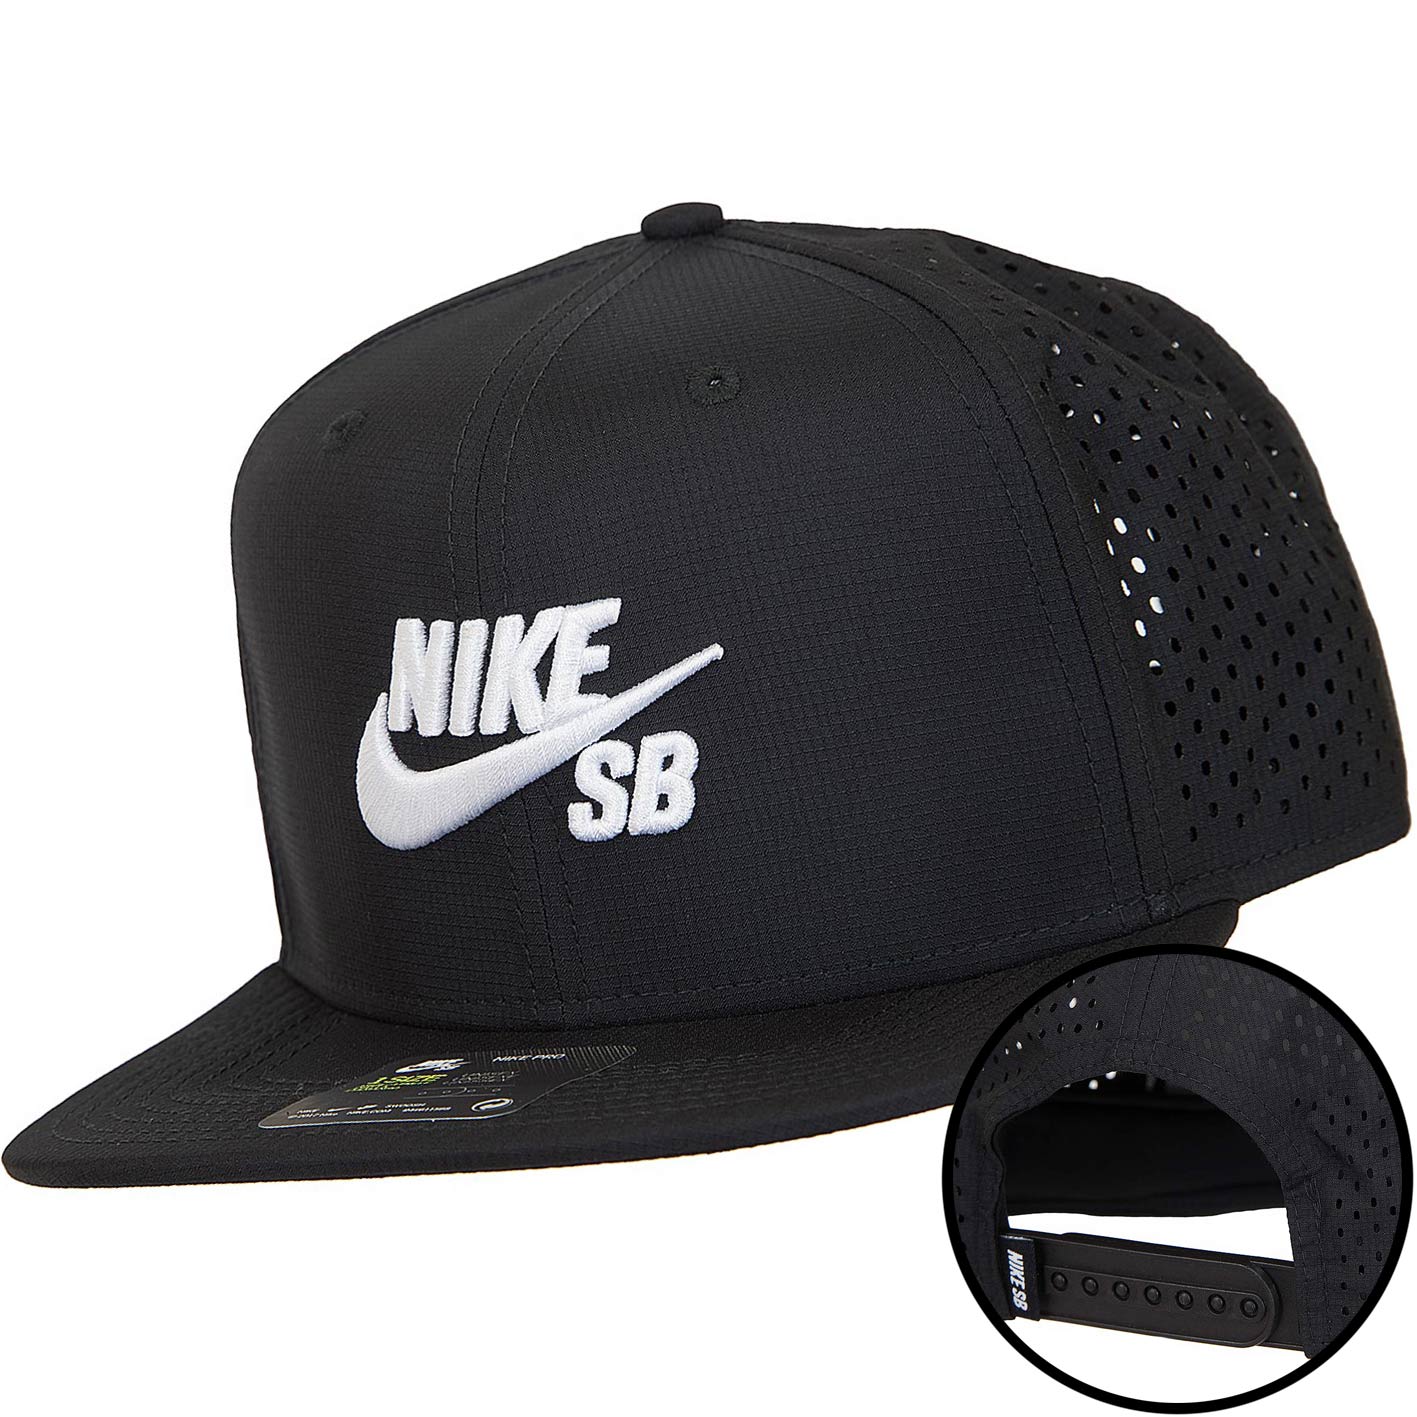 ☆ Nike Snapback Cap SB Aerobill schwarz/weiß - hier bestellen!